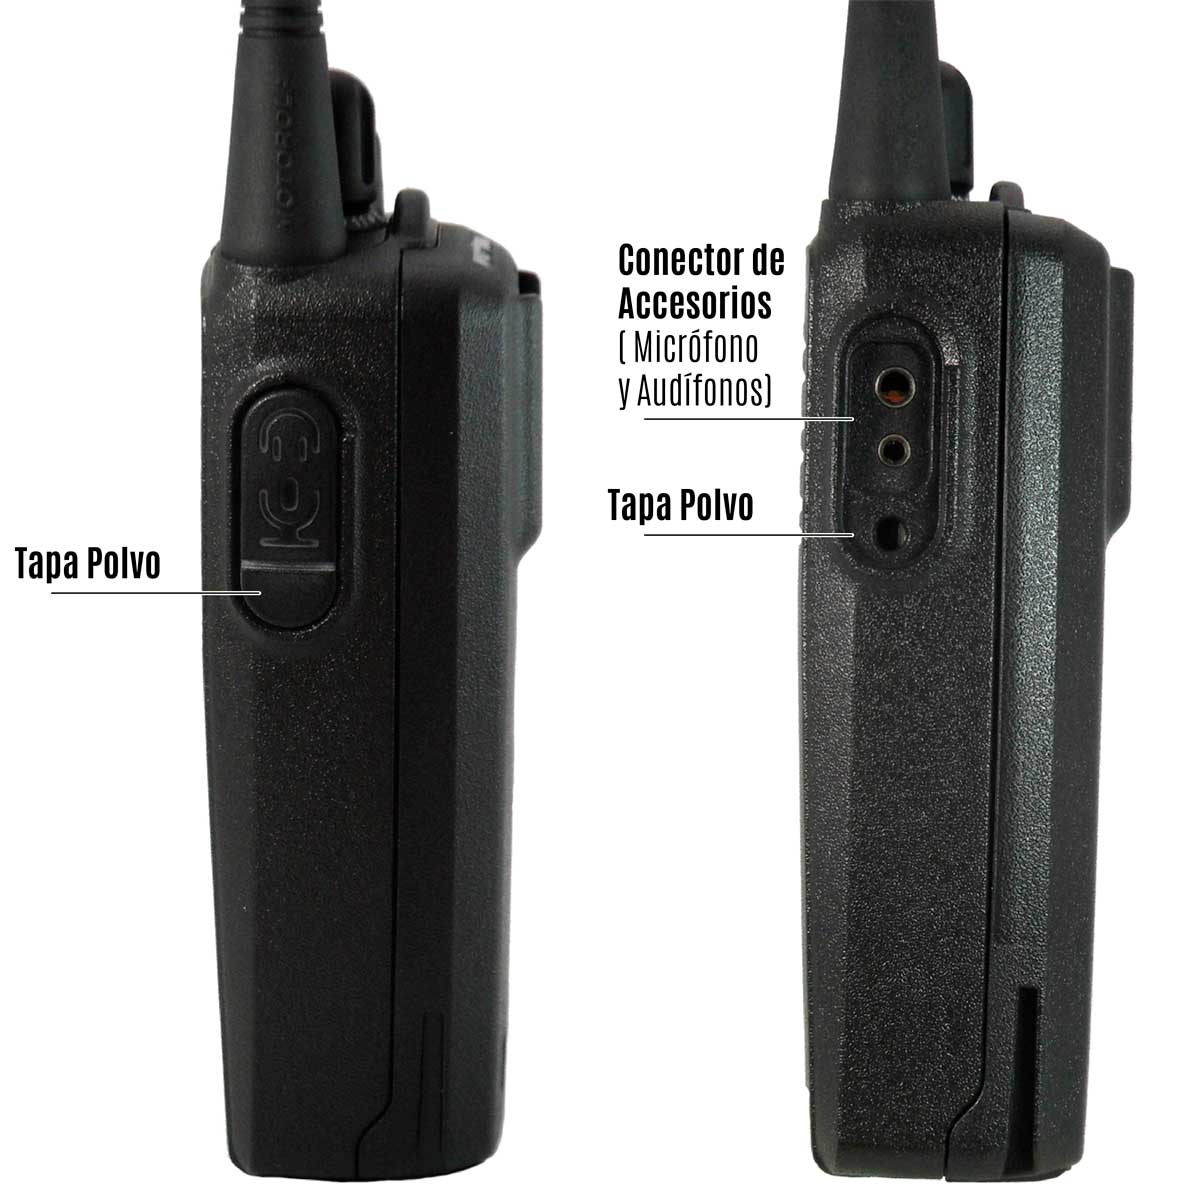 Radio Motorola EP350 MX Analógico LAH03KEC8AB7AN VHF 136-174 MHz sin Pantalla y sin Teclado